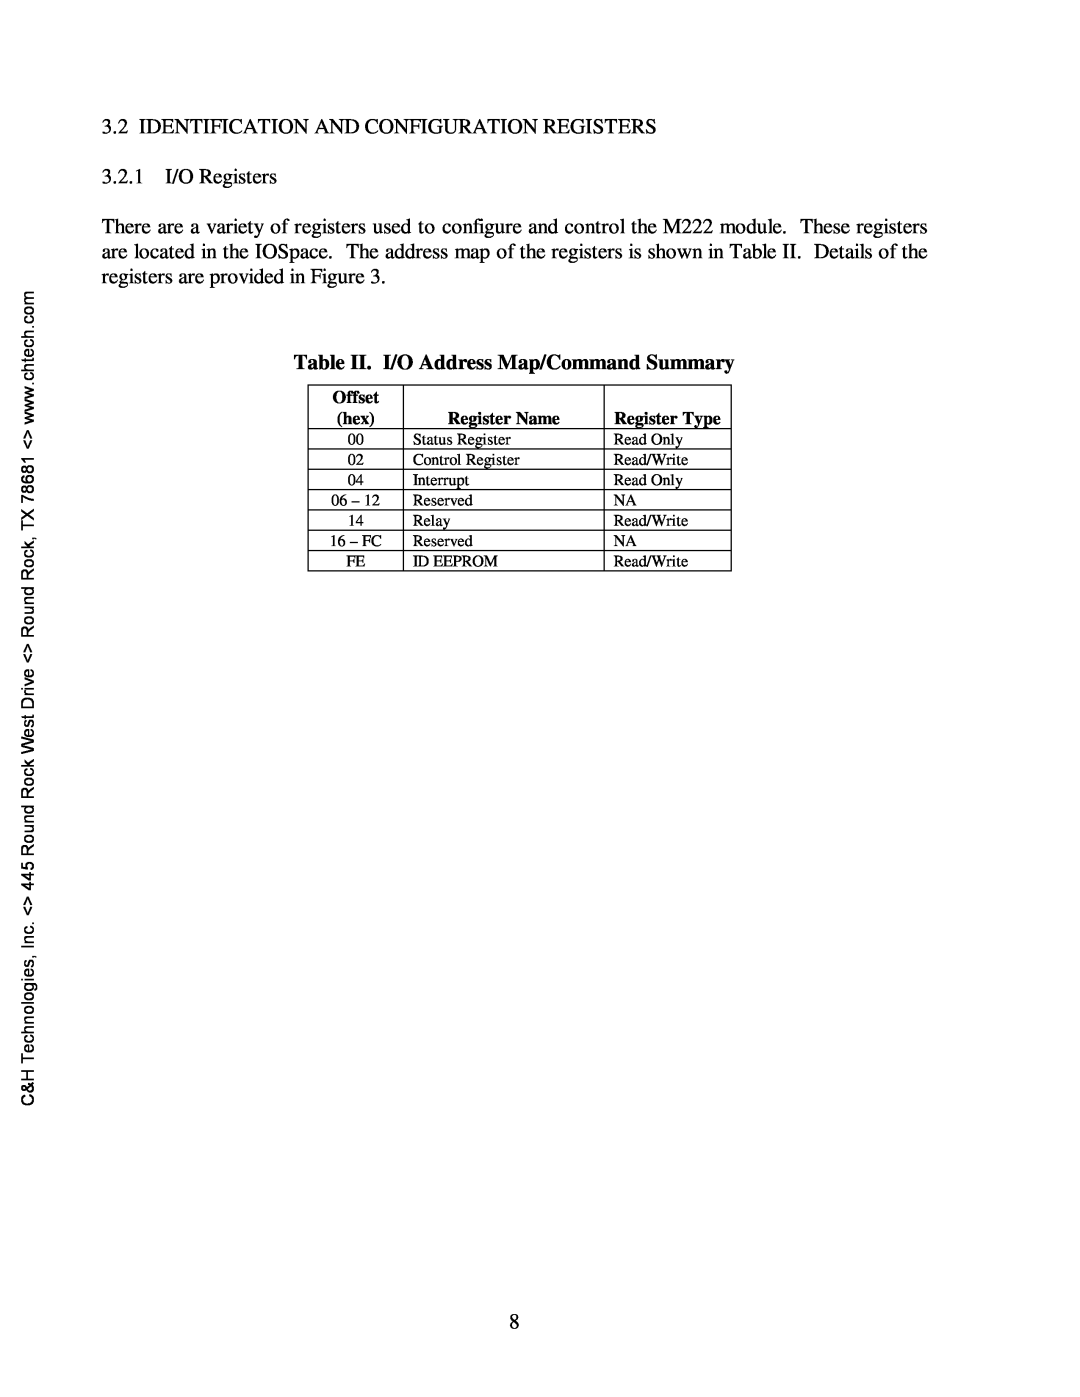 CH Tech M222 user manual Table II. I/O Address Map/Command Summary 